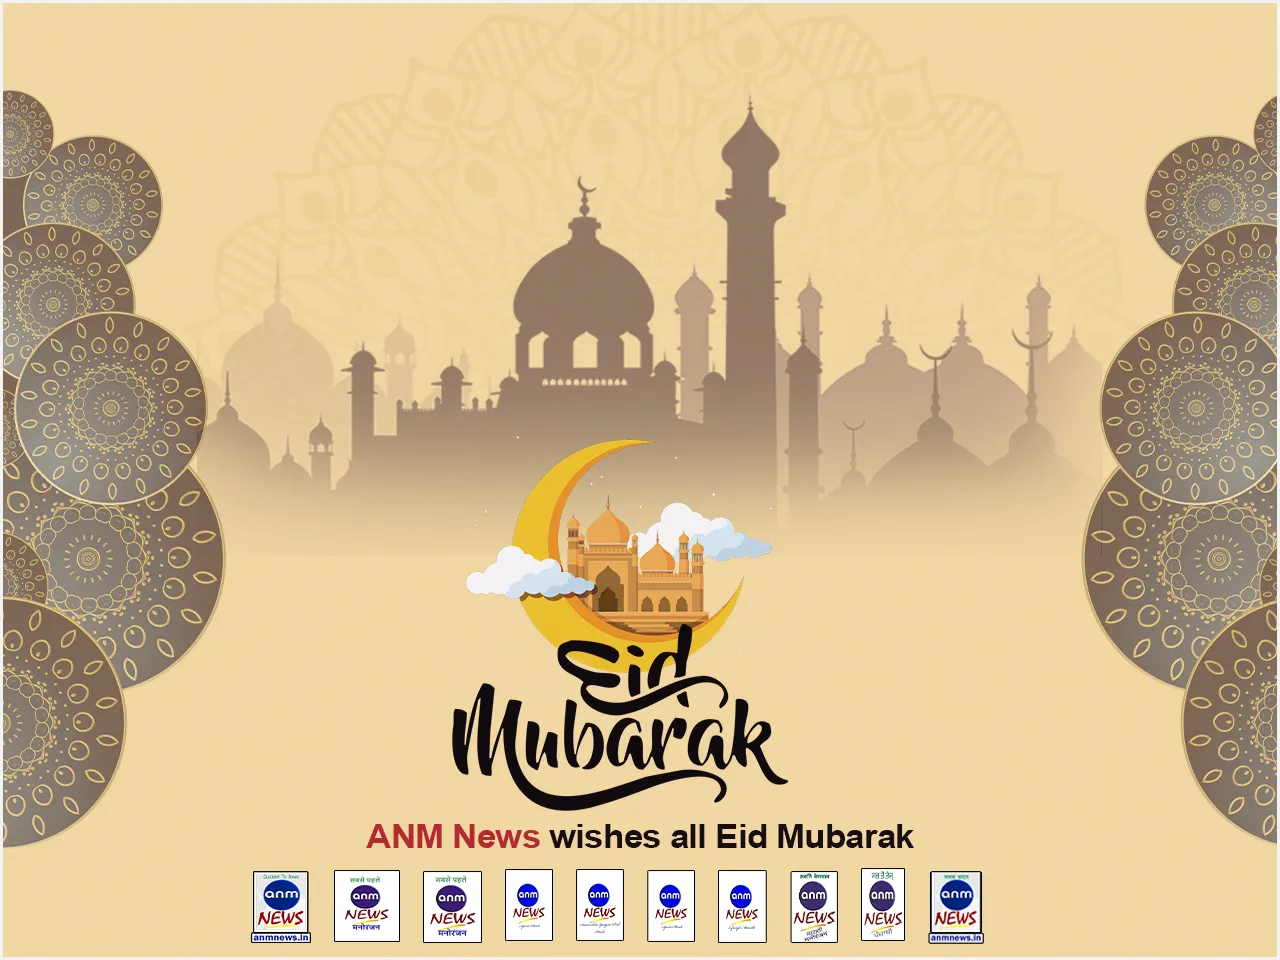 ANM News wishes all Eid Mubarak